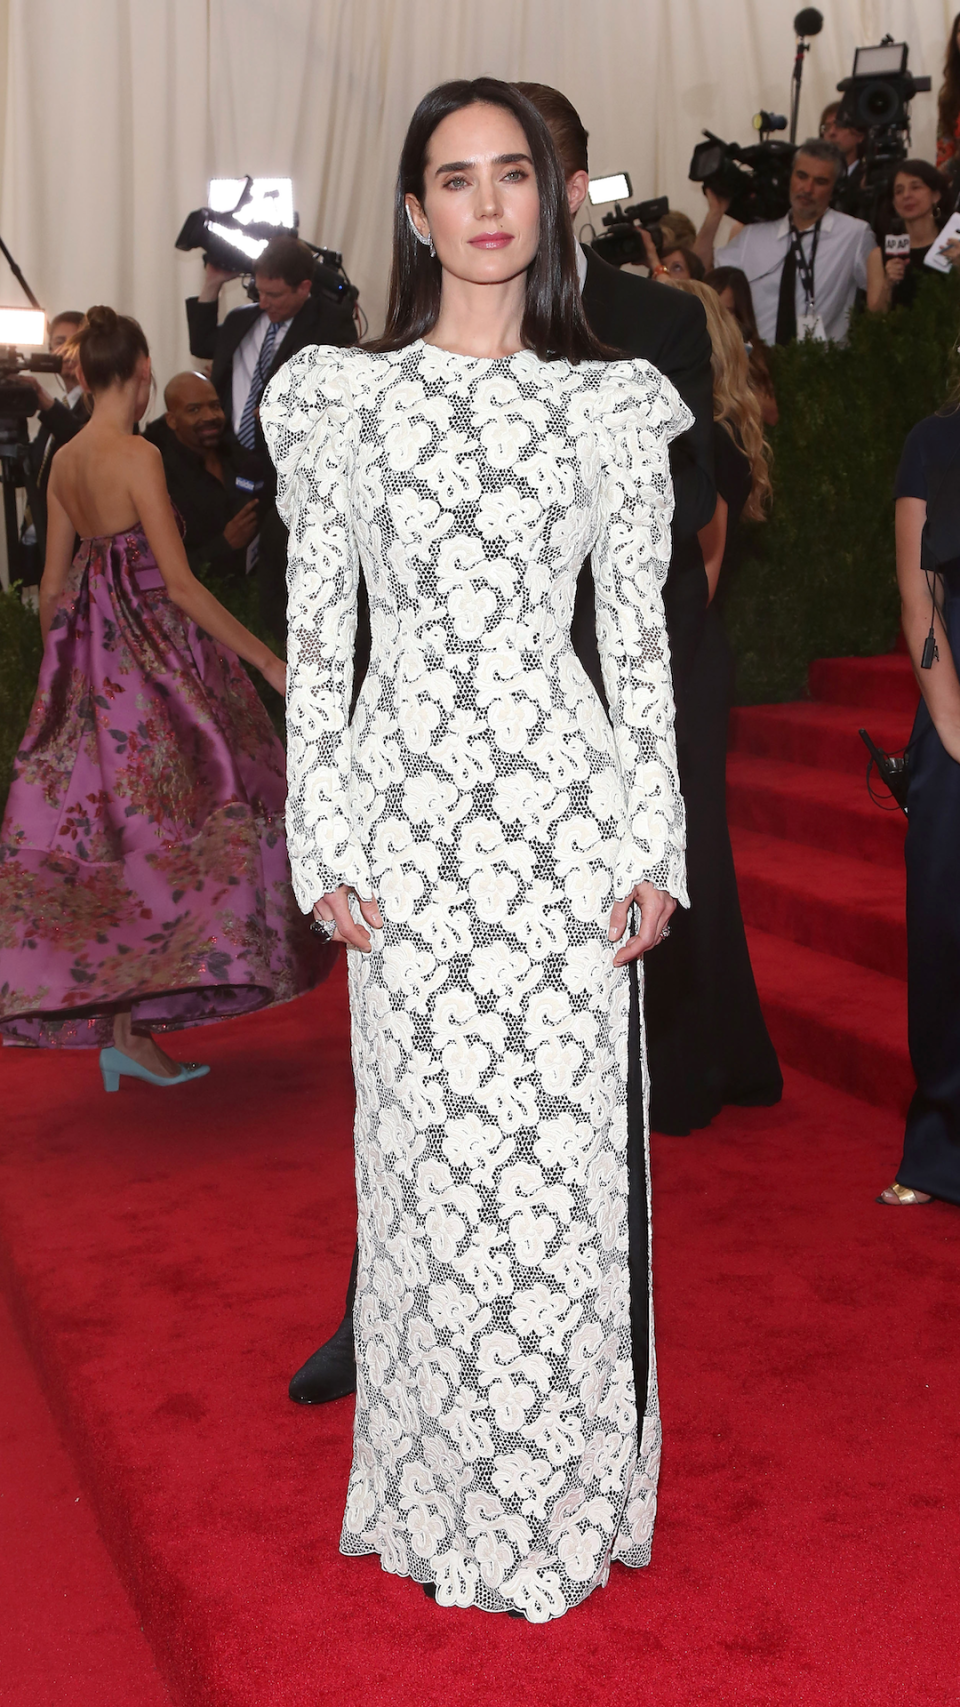 The lacy Met Gala 2015 dress